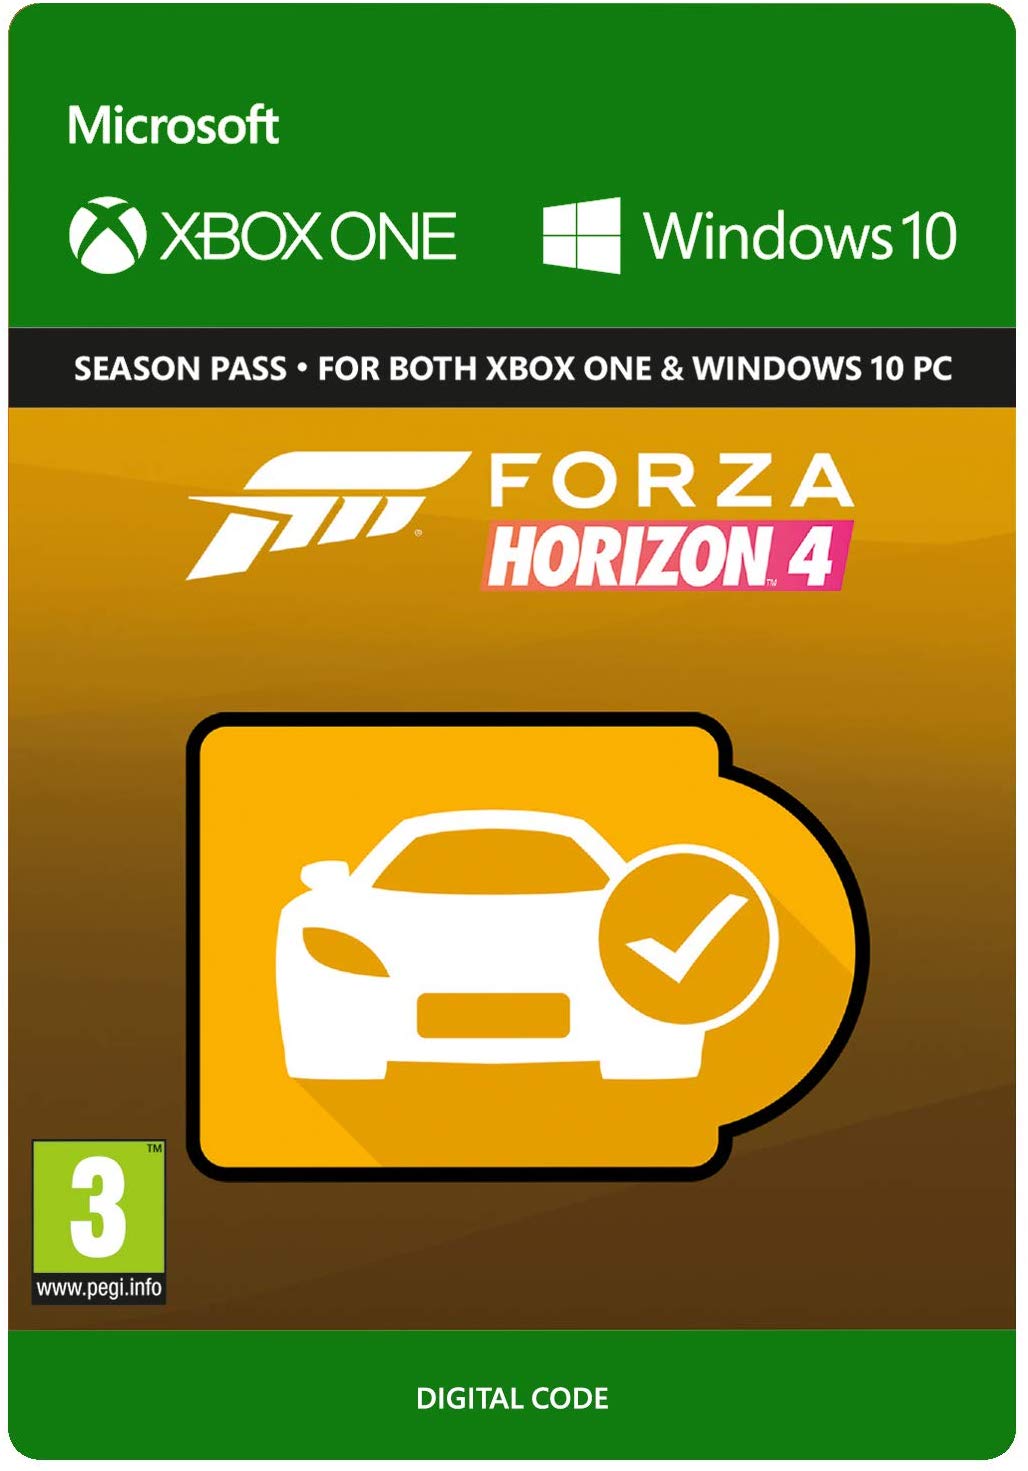 Entretener este medallista Forza Horizon 4: Car Pass CD Key for Xbox One (Digital Download)